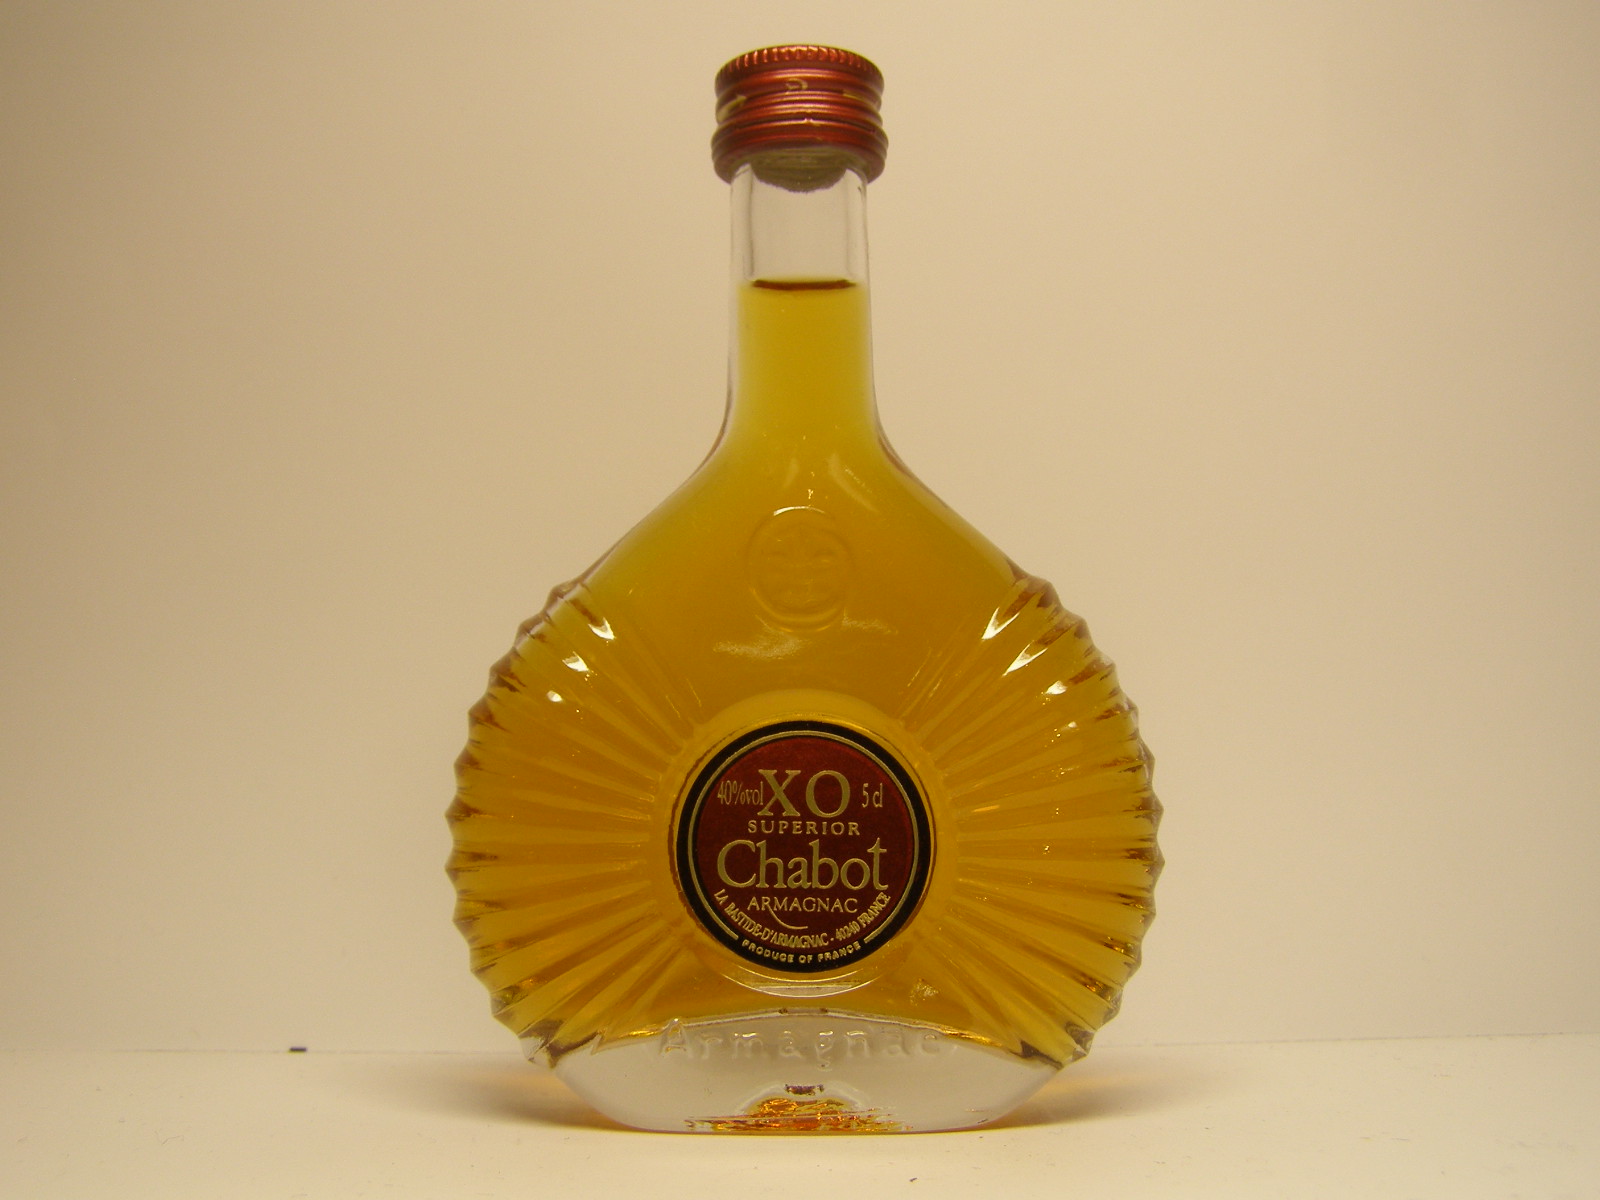 Chabot Armagnac XO Superior (100% Authentic) - Winepak Corporation